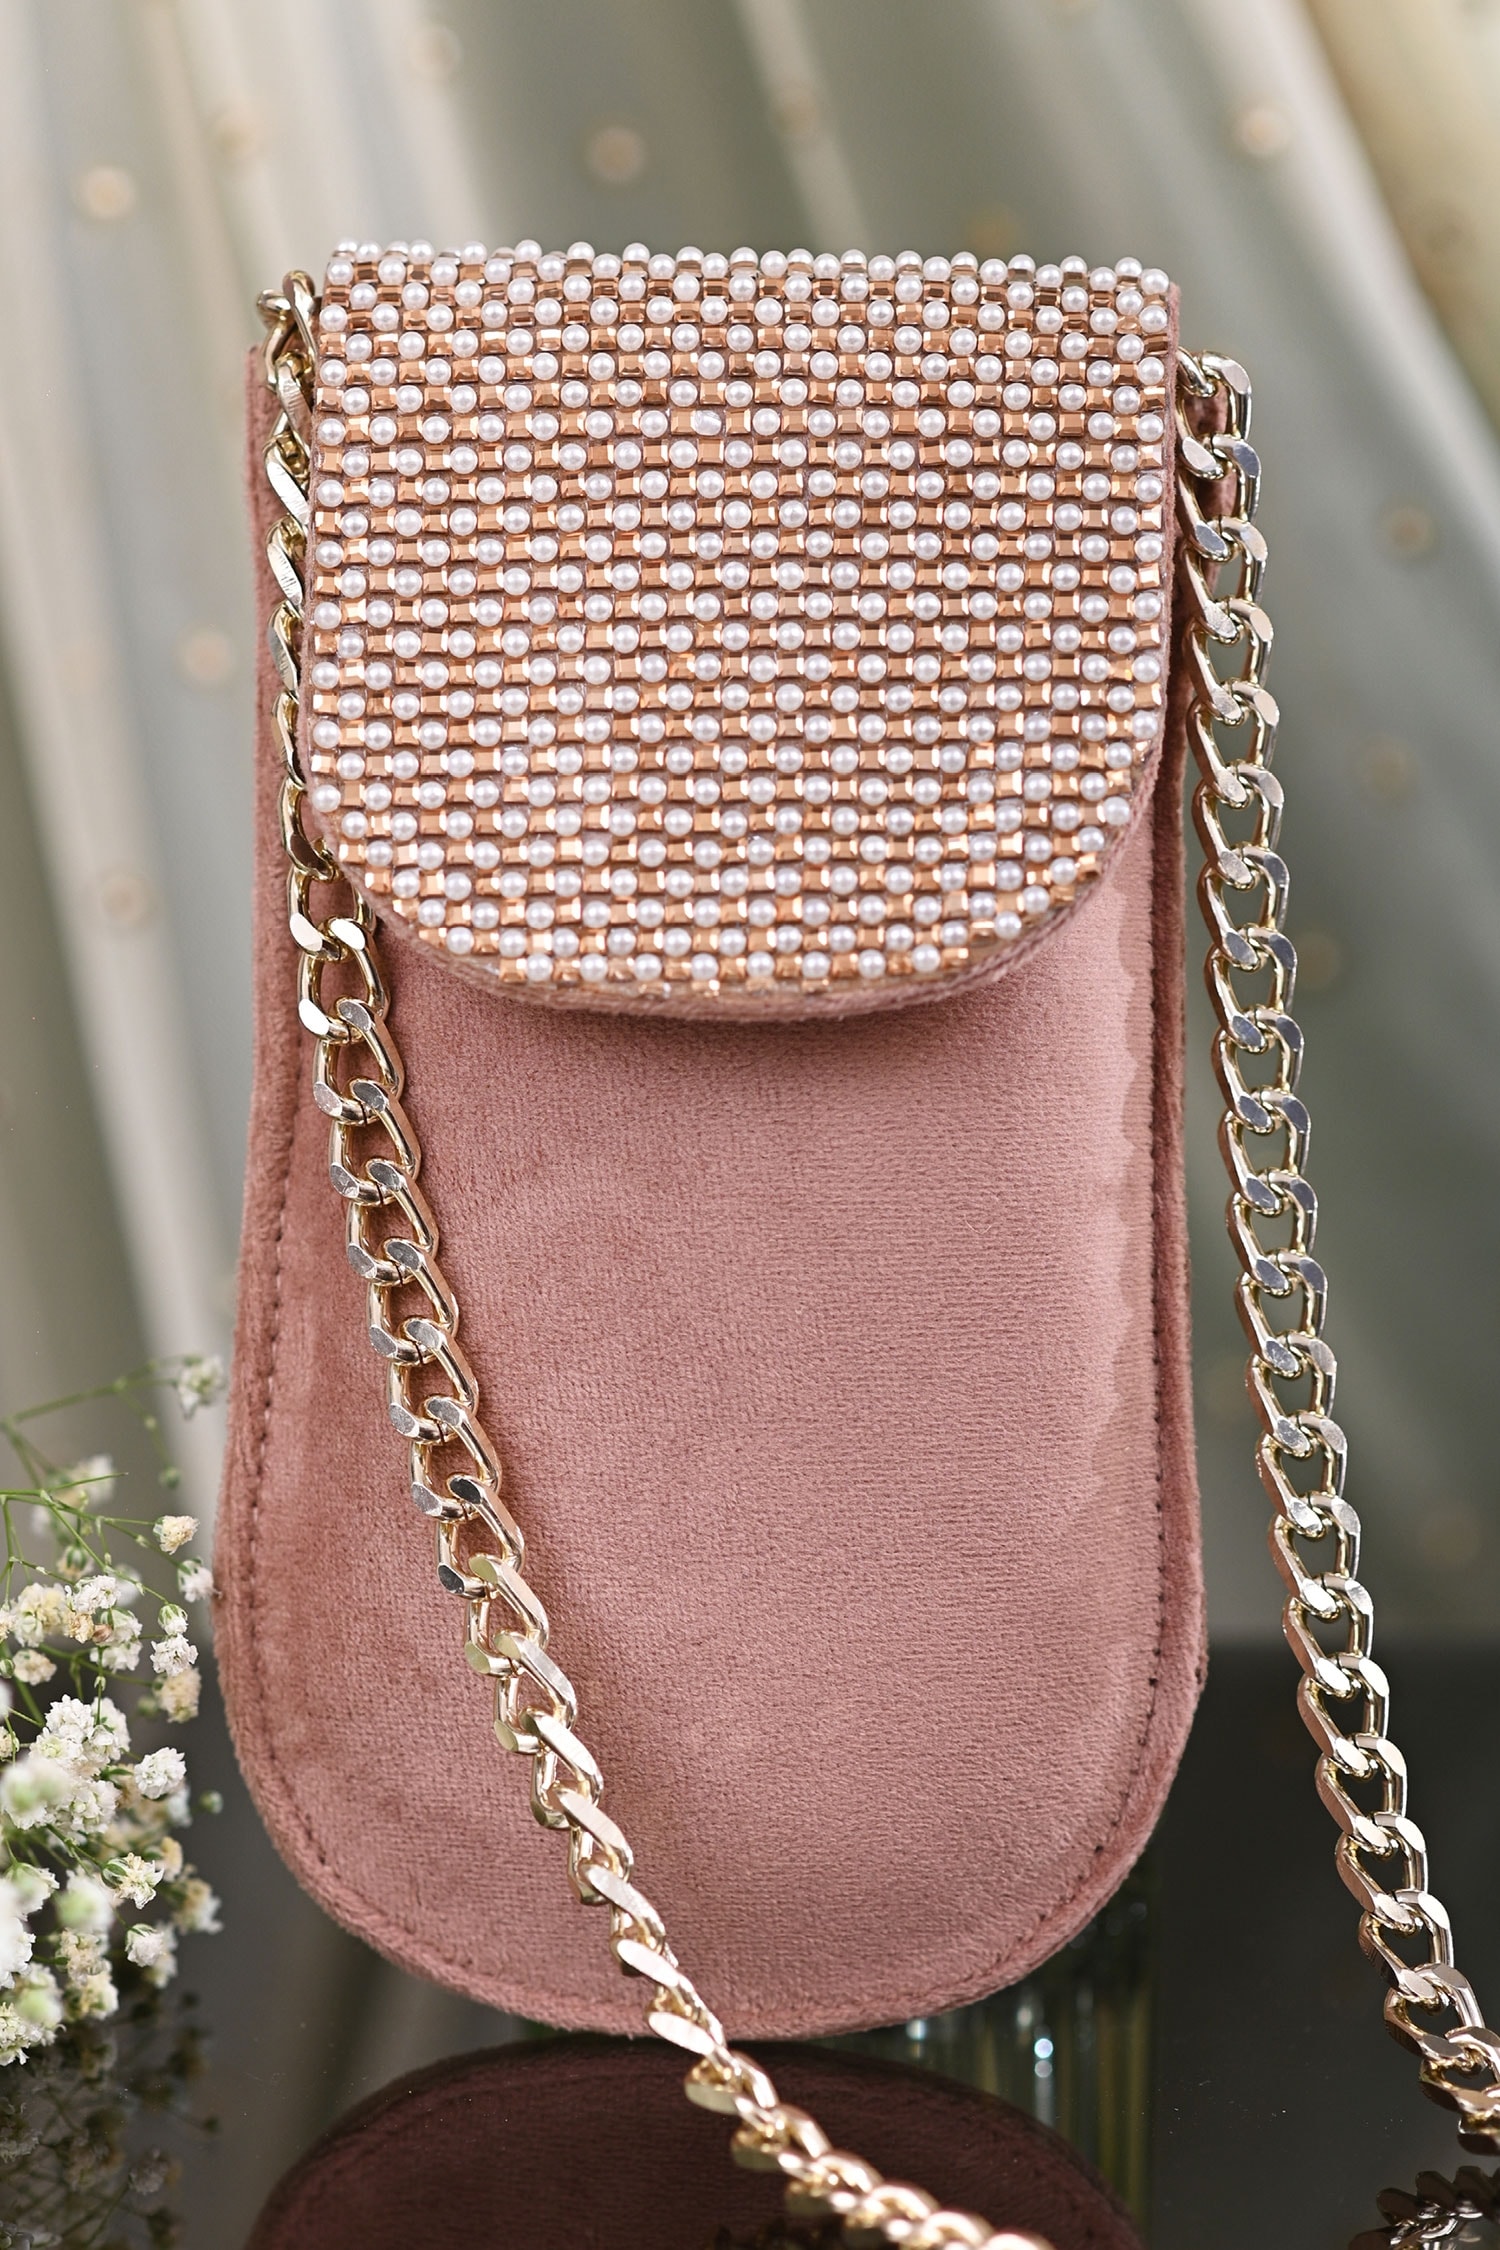 Buy Generic Ladies Handbag Imitation Leather Shoulder Bag Fashion Wallet  Long Metal Chain Lady Handbag Color Rose Red at Amazon.in